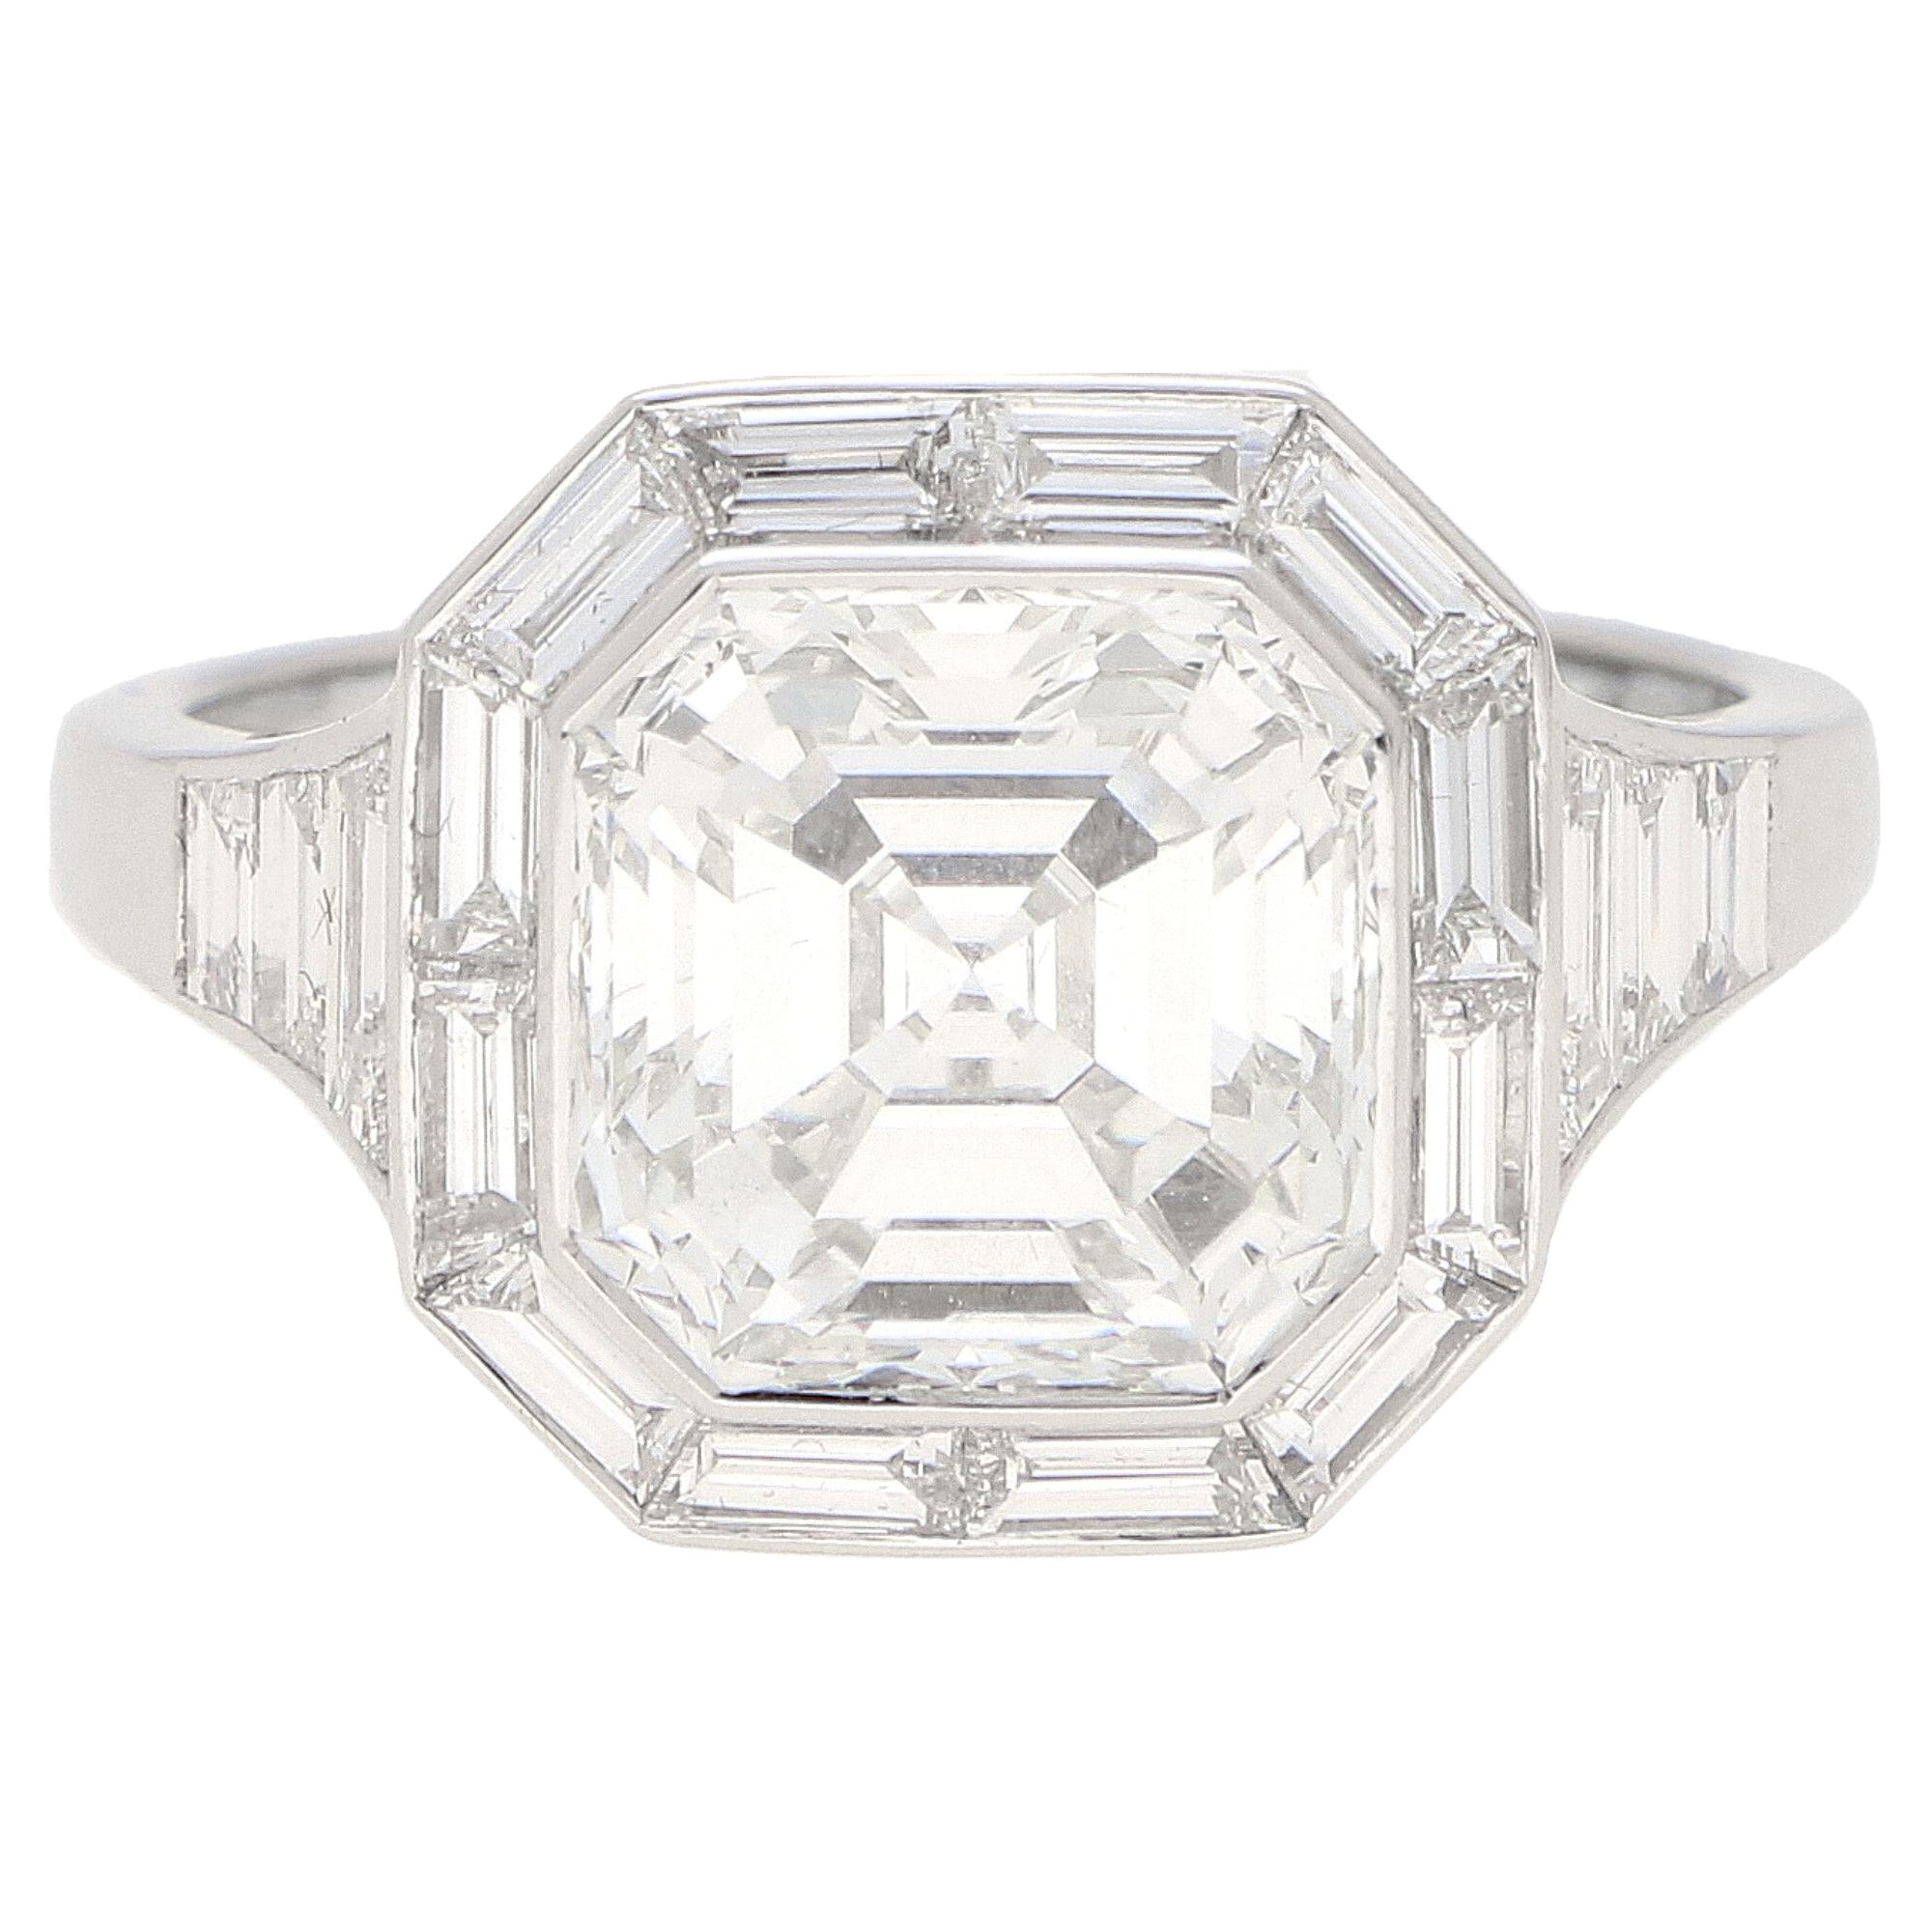 GIA Certified Art Deco Style Asscher Cut Diamond Engagement Ring Set in Platinum